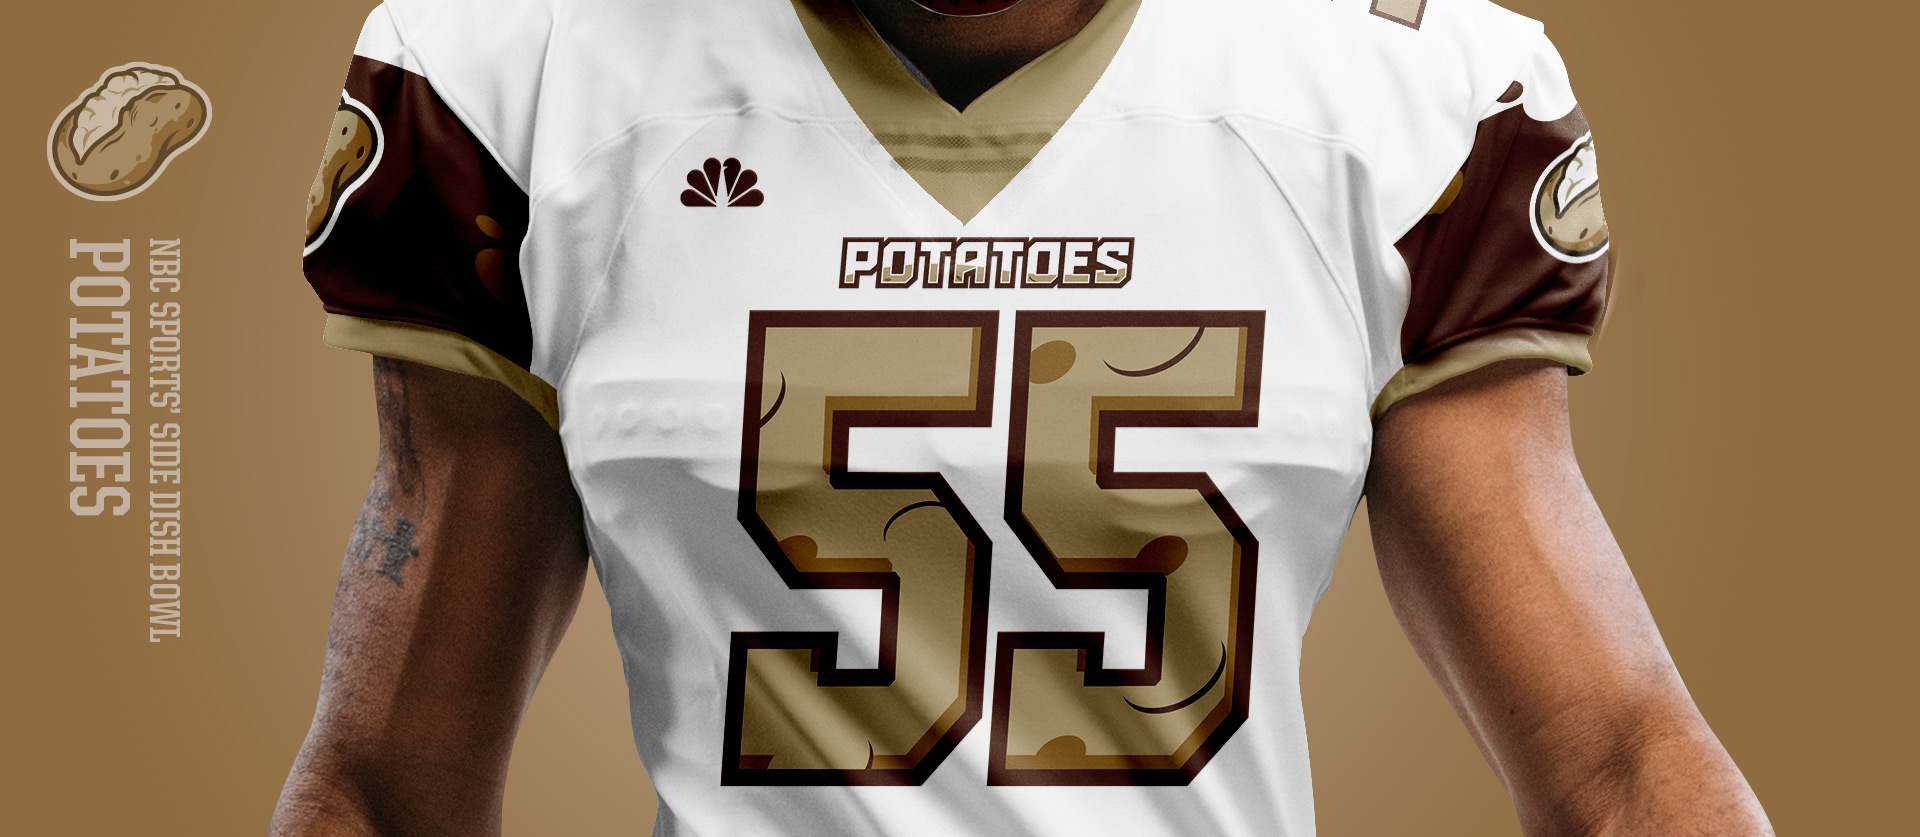 Potatoes Front - Football Uniform Design for NBC Sports Thanksgiving Side Dish Bowl